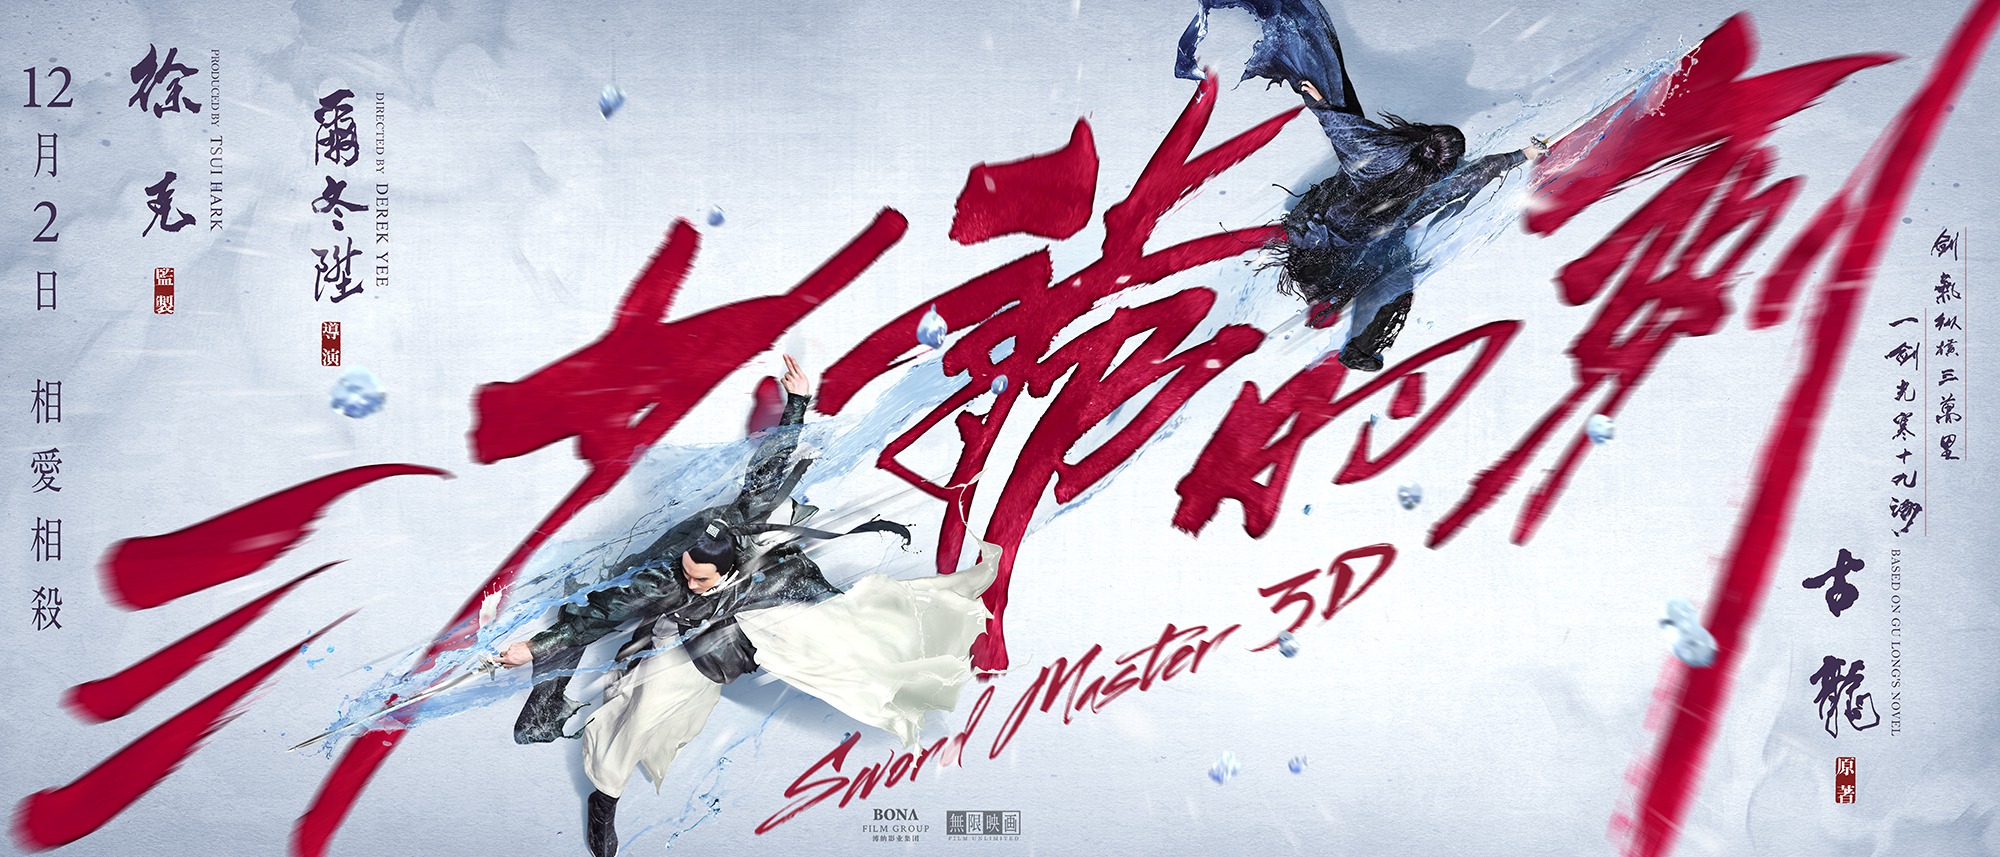 Mega Sized Movie Poster Image for San shao ye de jian (#9 of 11)